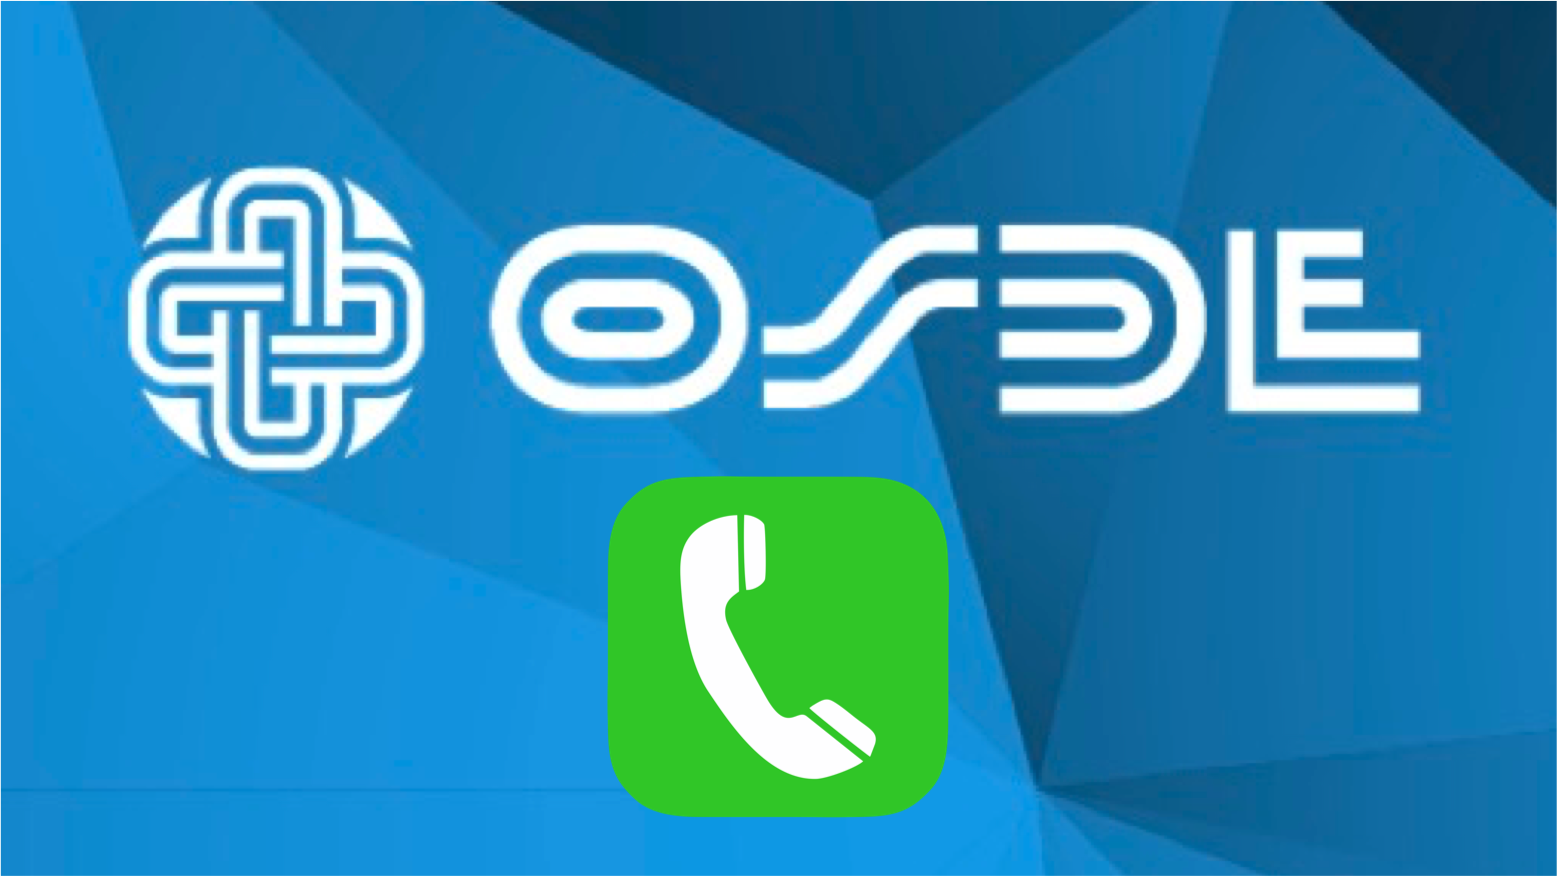 Obrasocial-OSDE-Telefonos